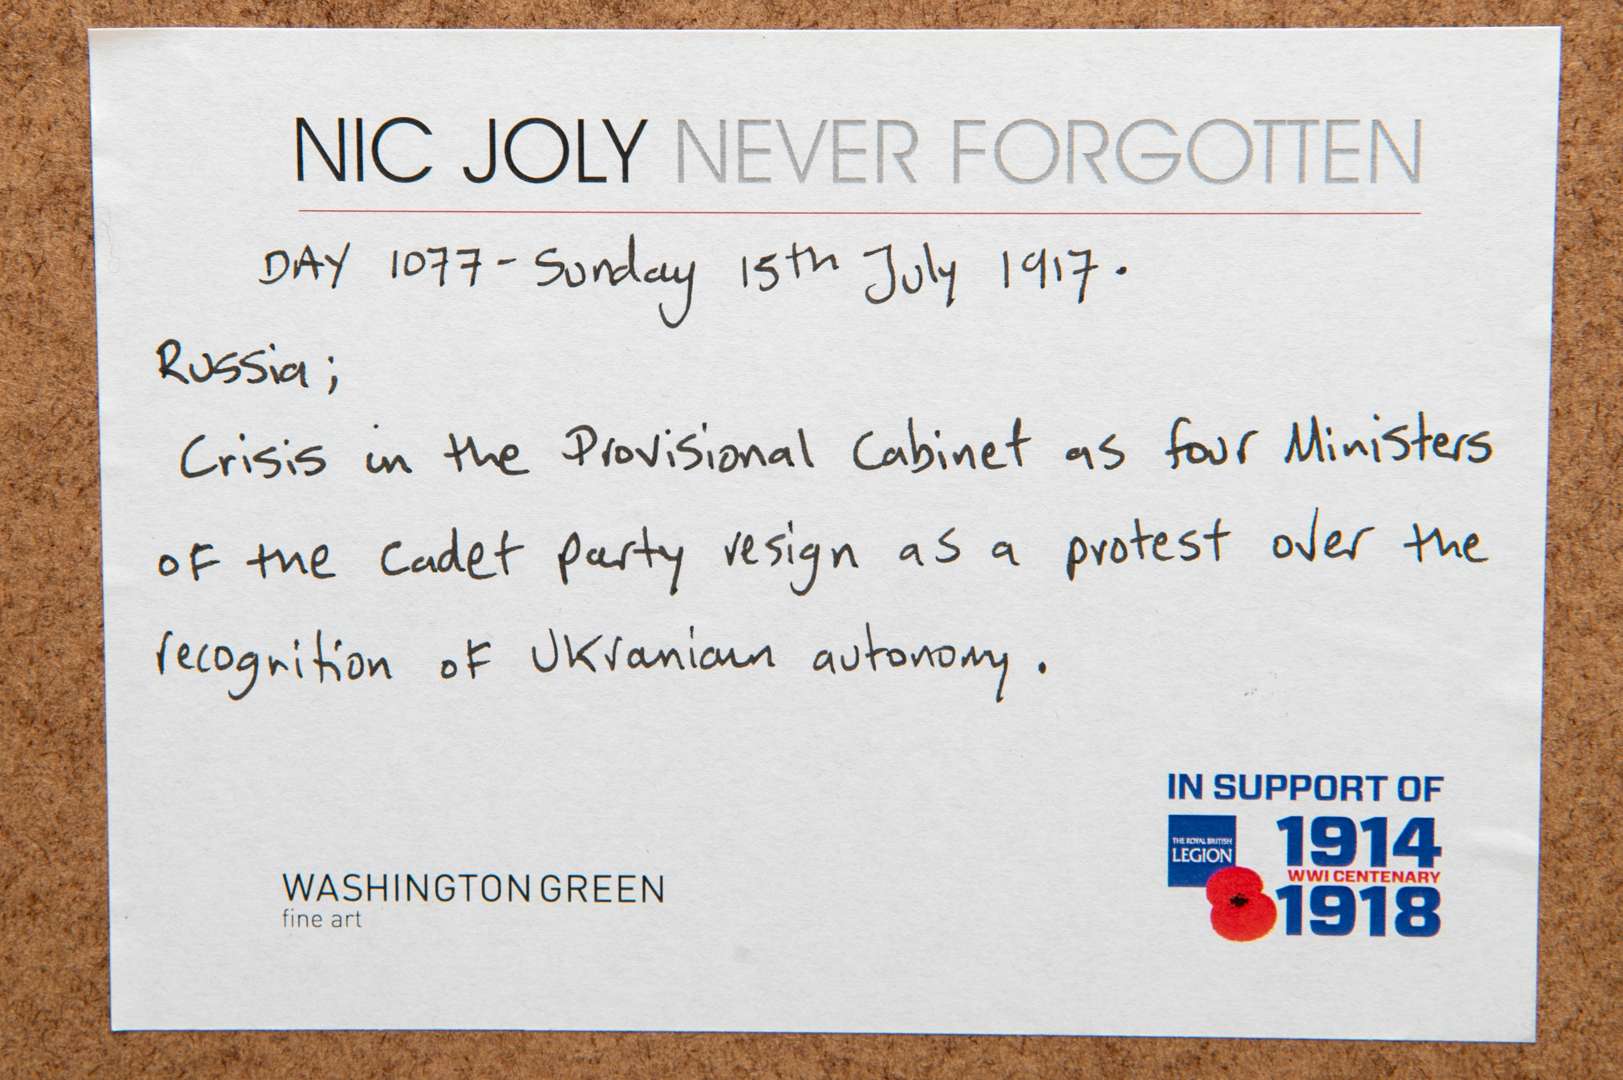 <p>NIC JOLY, &nbsp;“NEVER FORGOTTEN, DAY 1077", mixed media.</p>